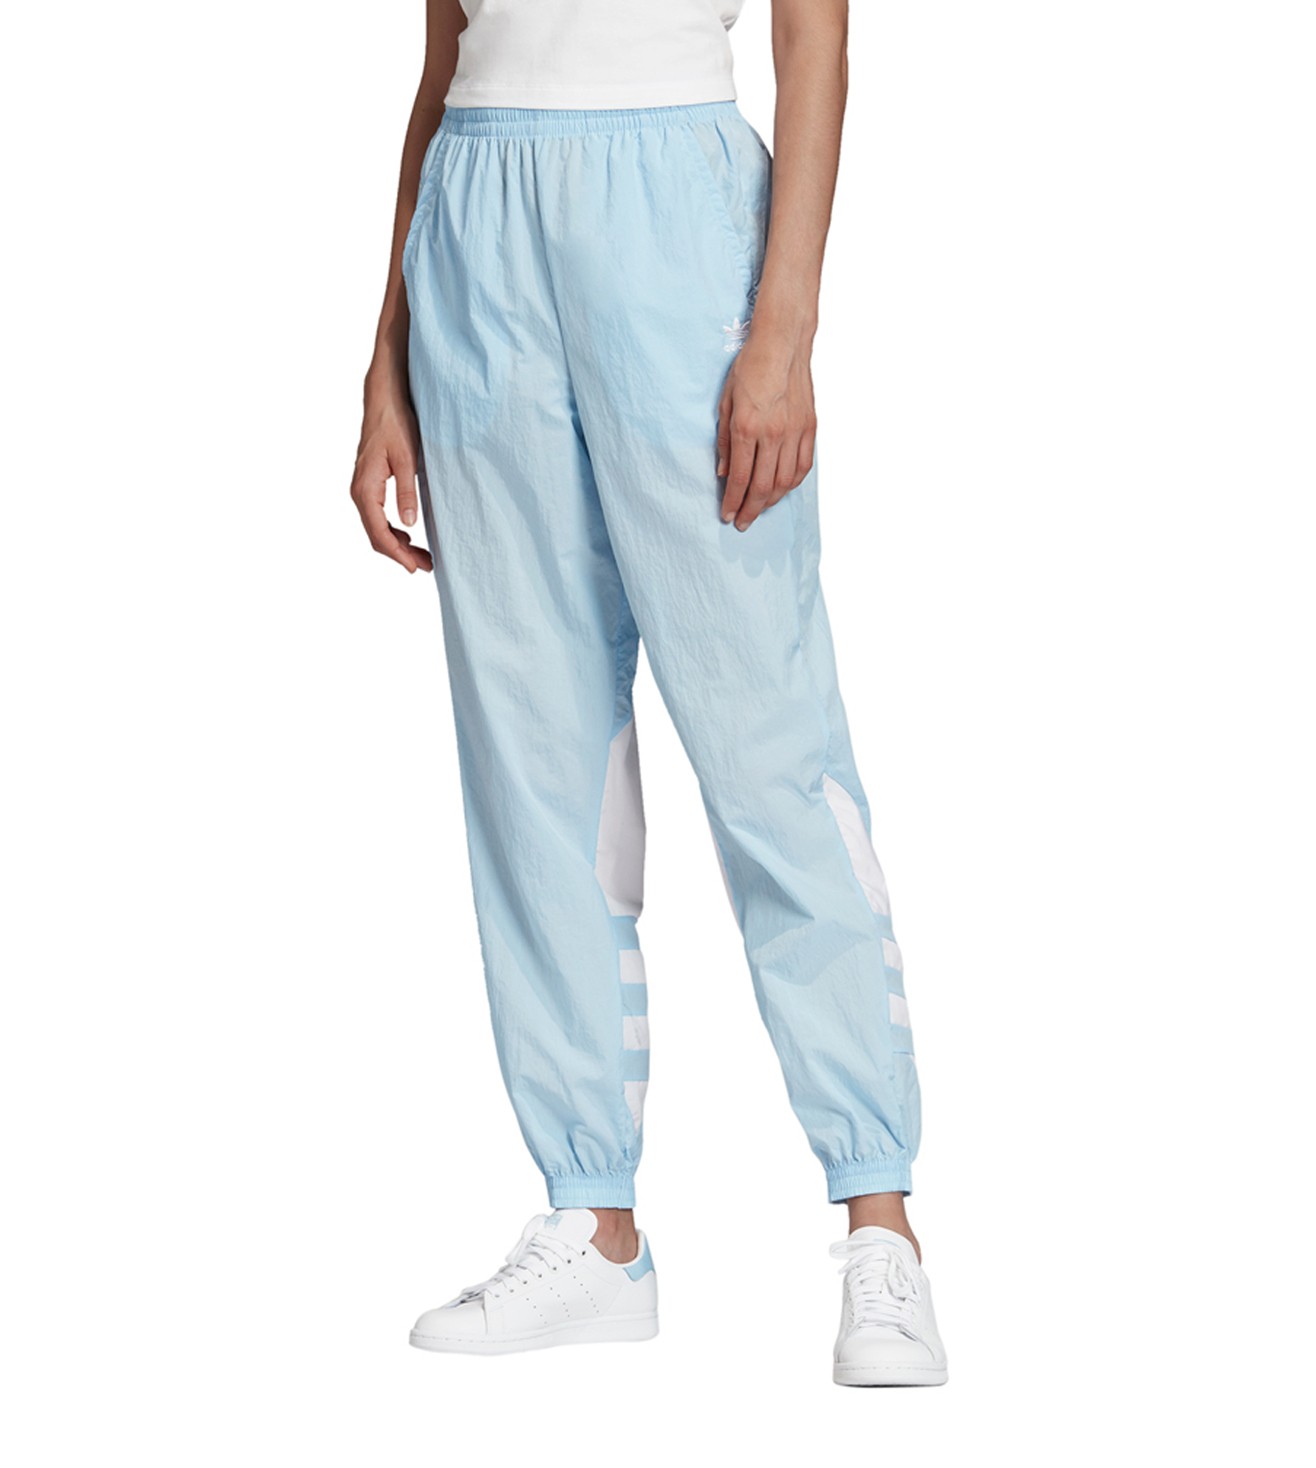 light blue adidas pants